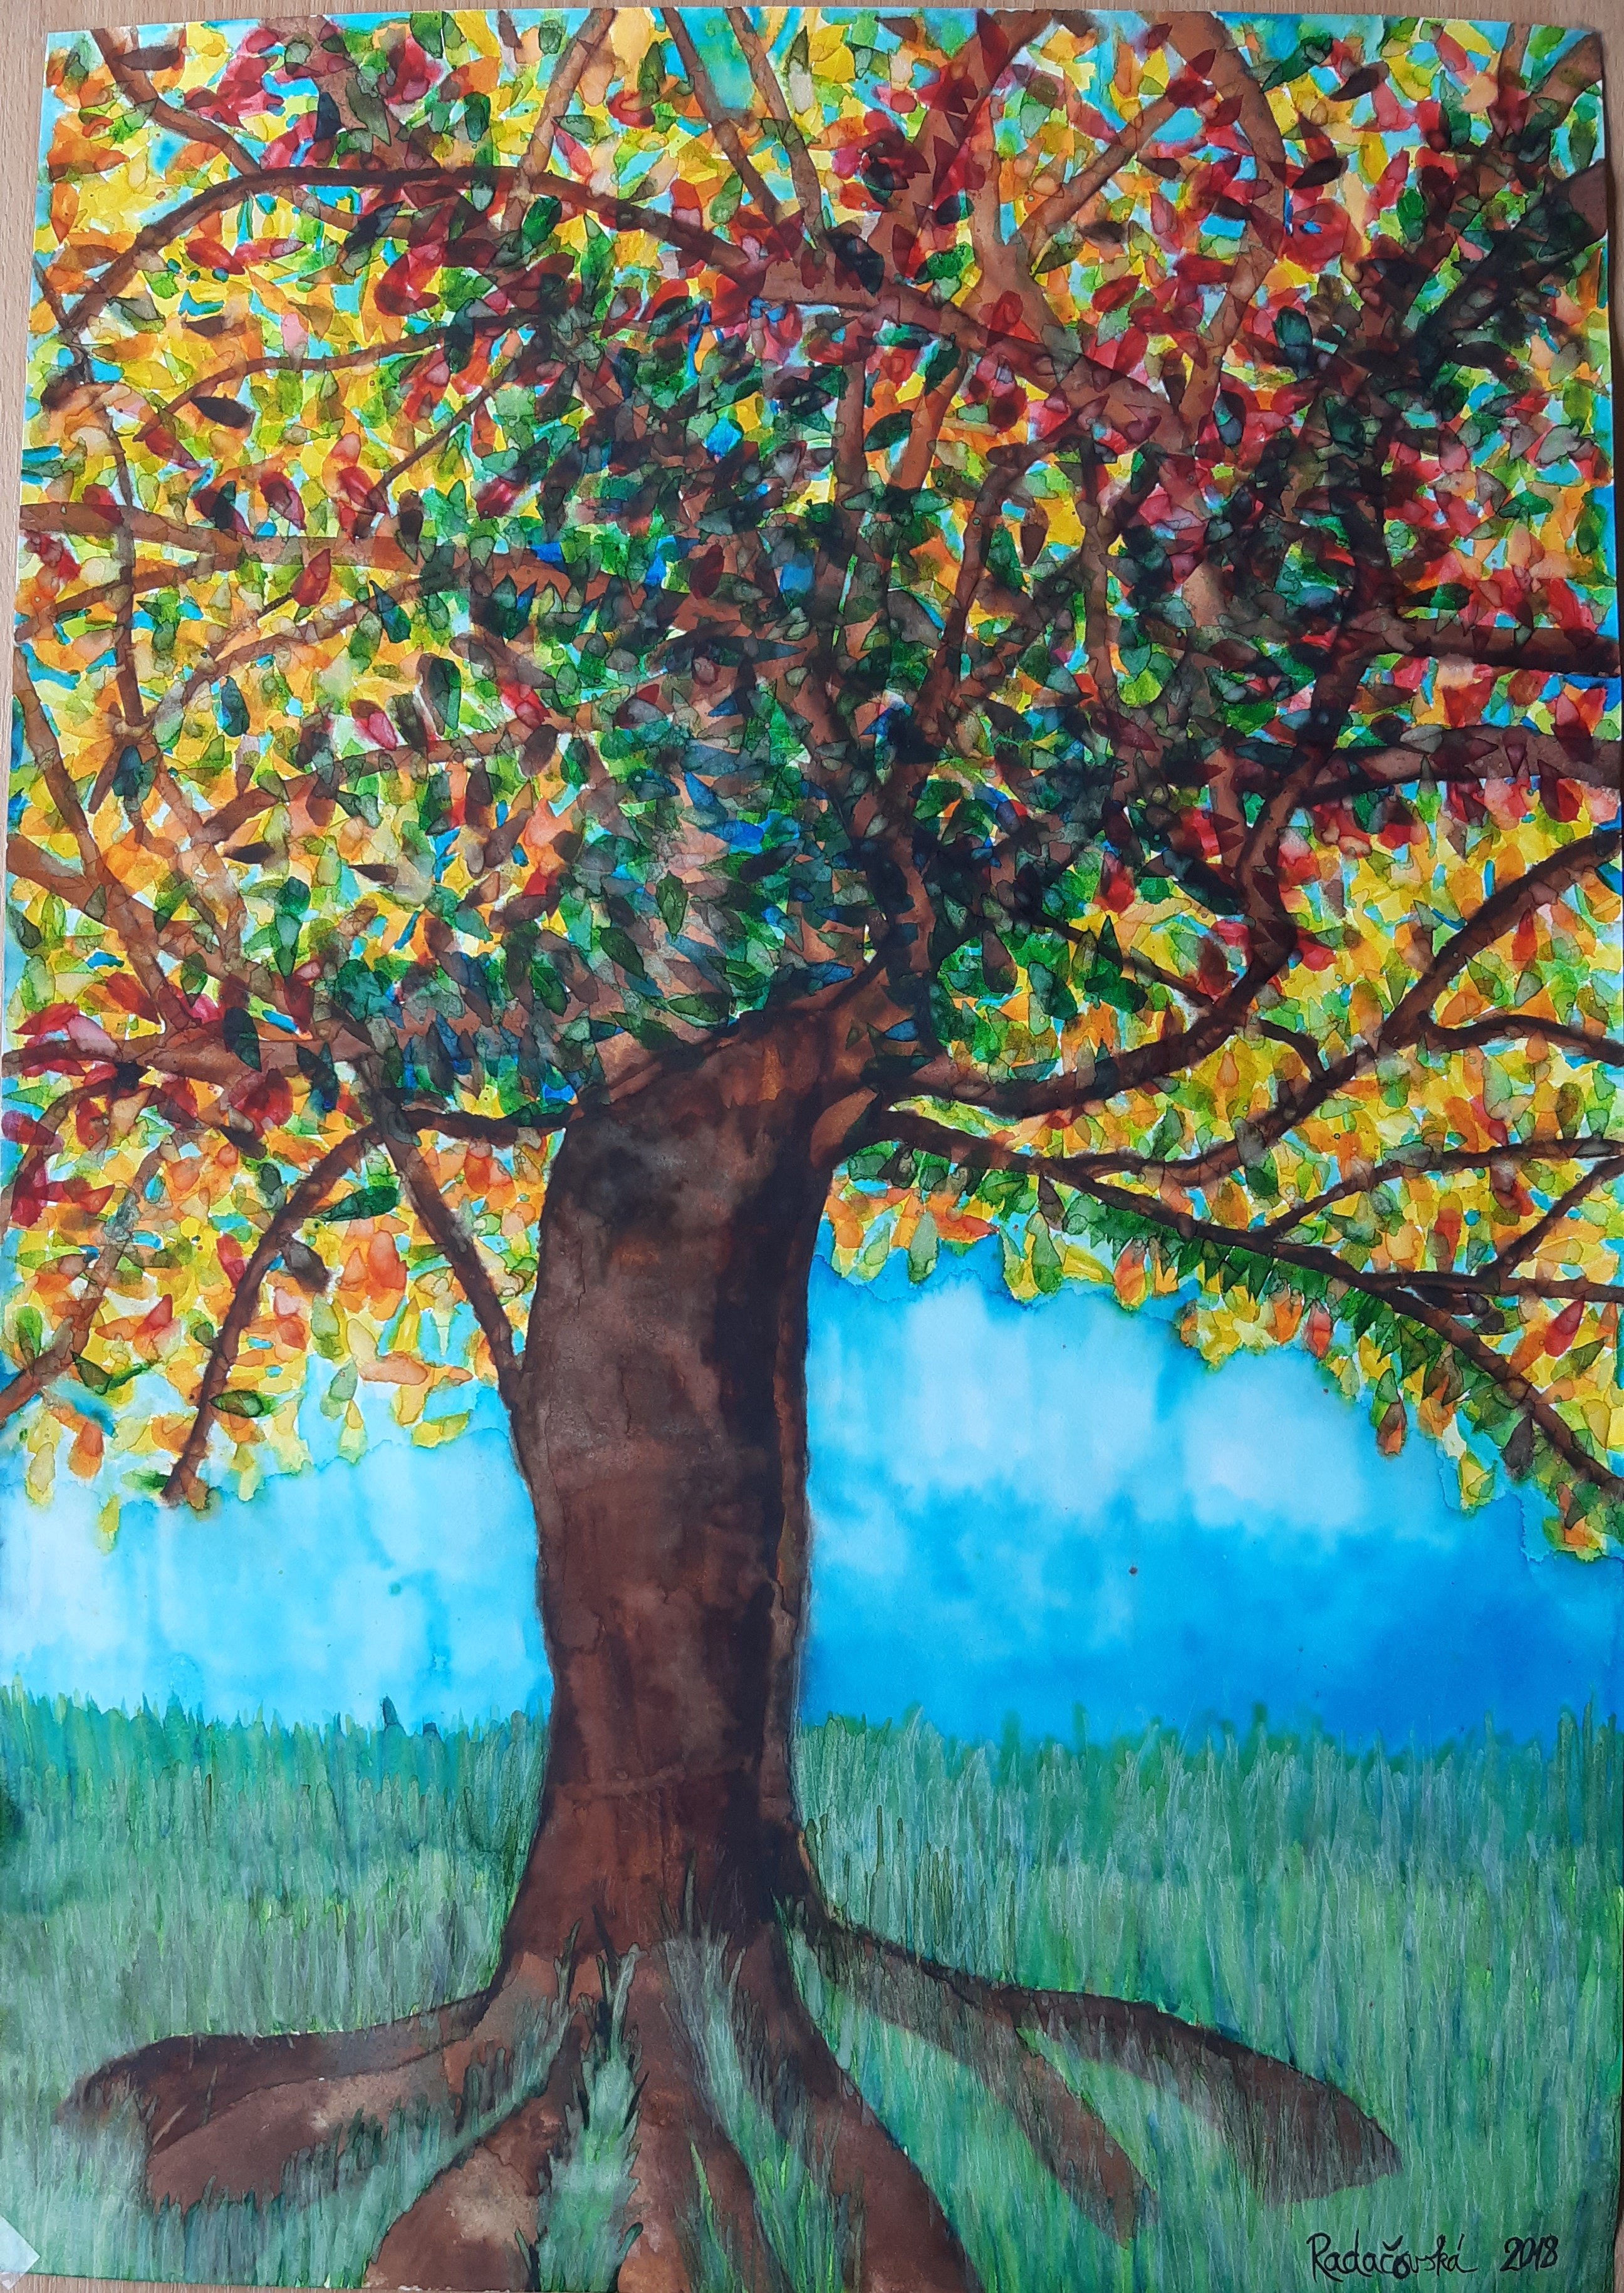 aniline colors - a tree